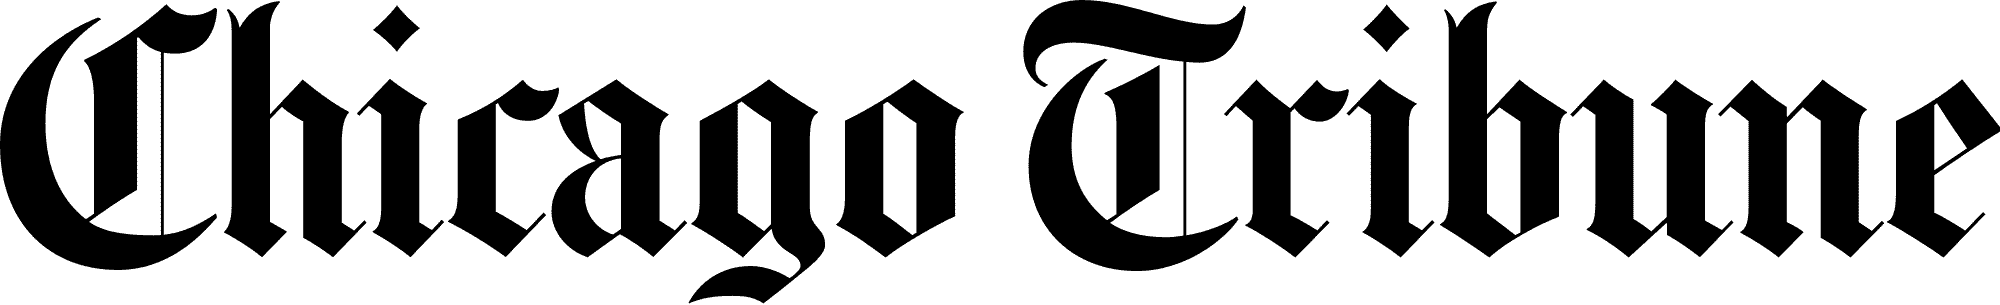 Chicago Tribune logo